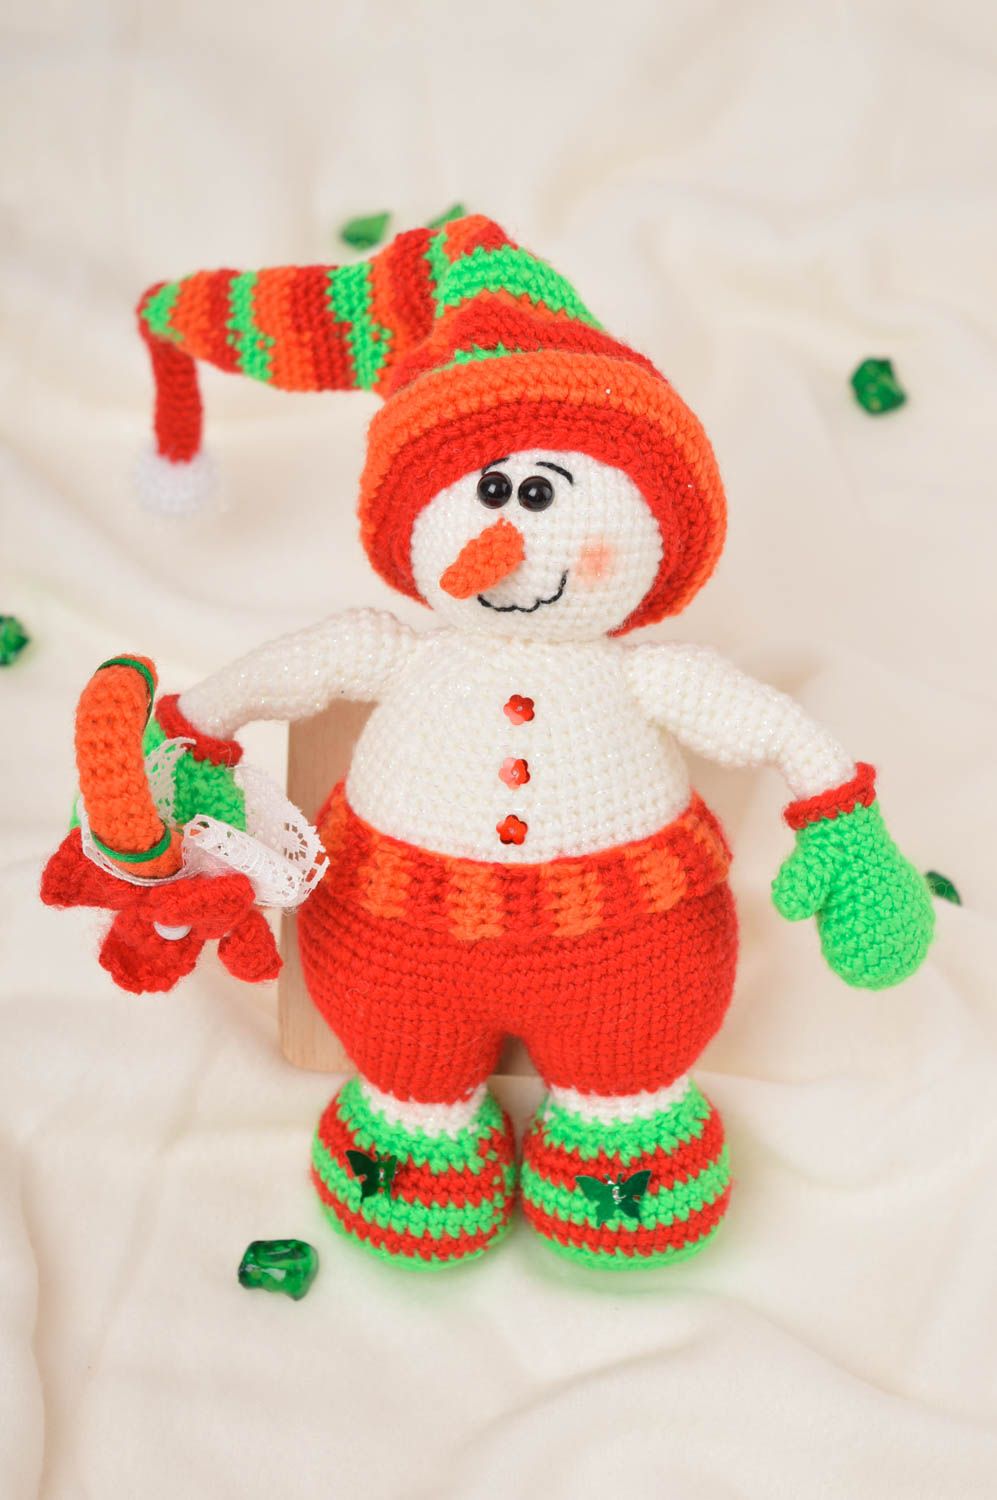 Festive toy for Christmas handmade crocheted toy for babied nursery decor photo 1